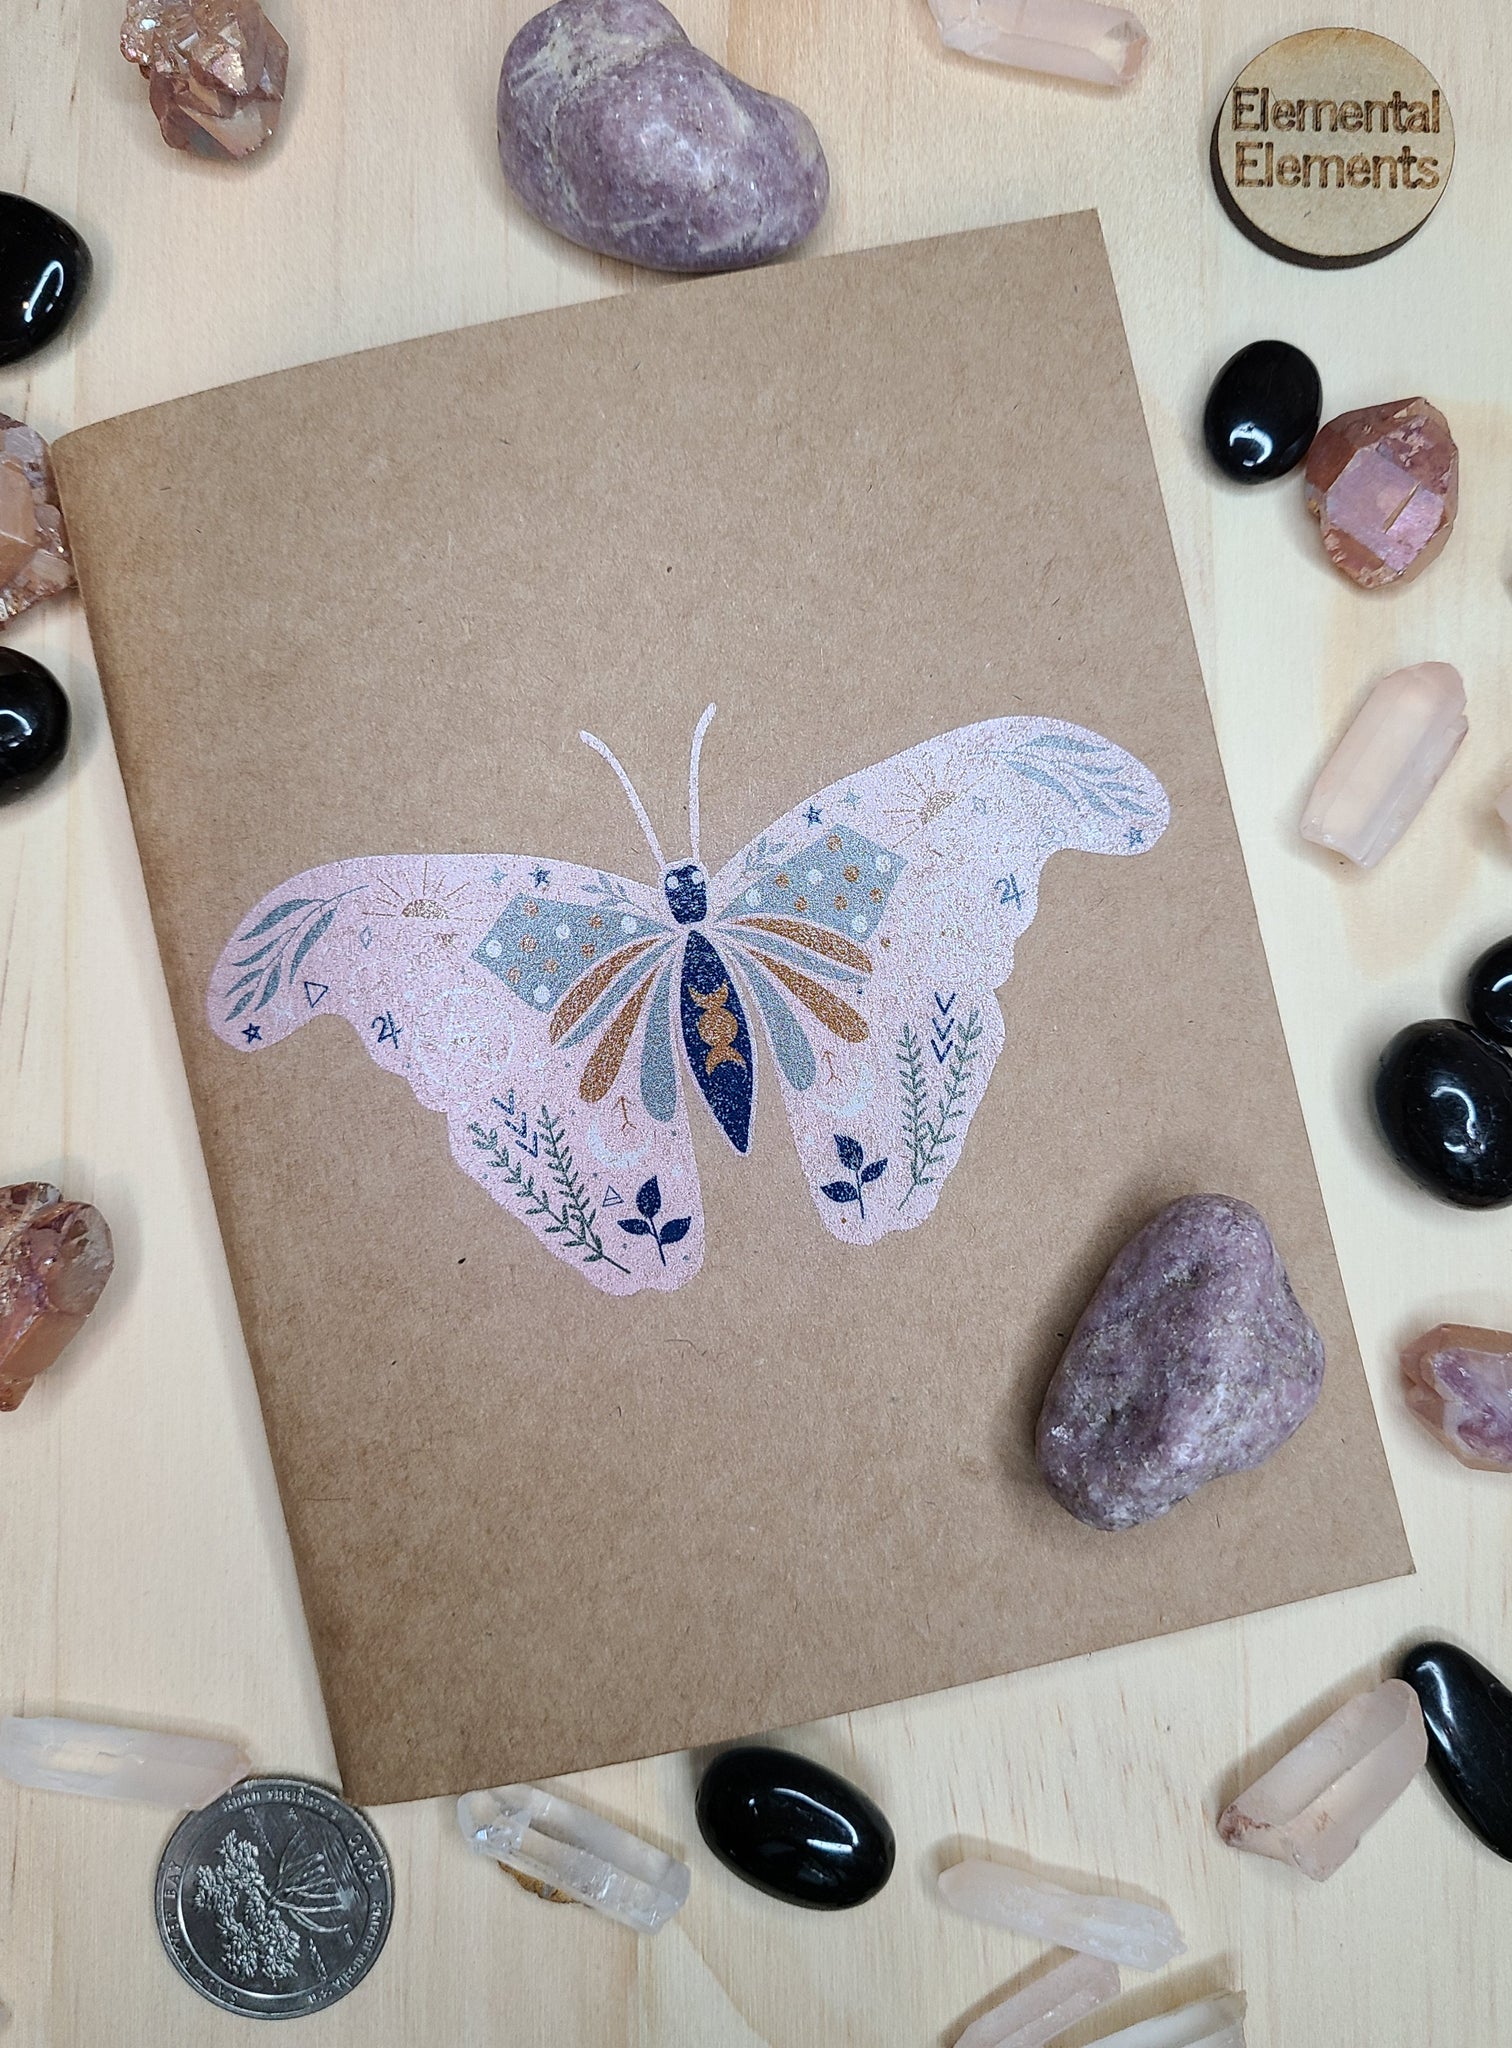 Whimsical Lunar Moth Butterfly Pocket Notebook - Elemental Elements Notebooks